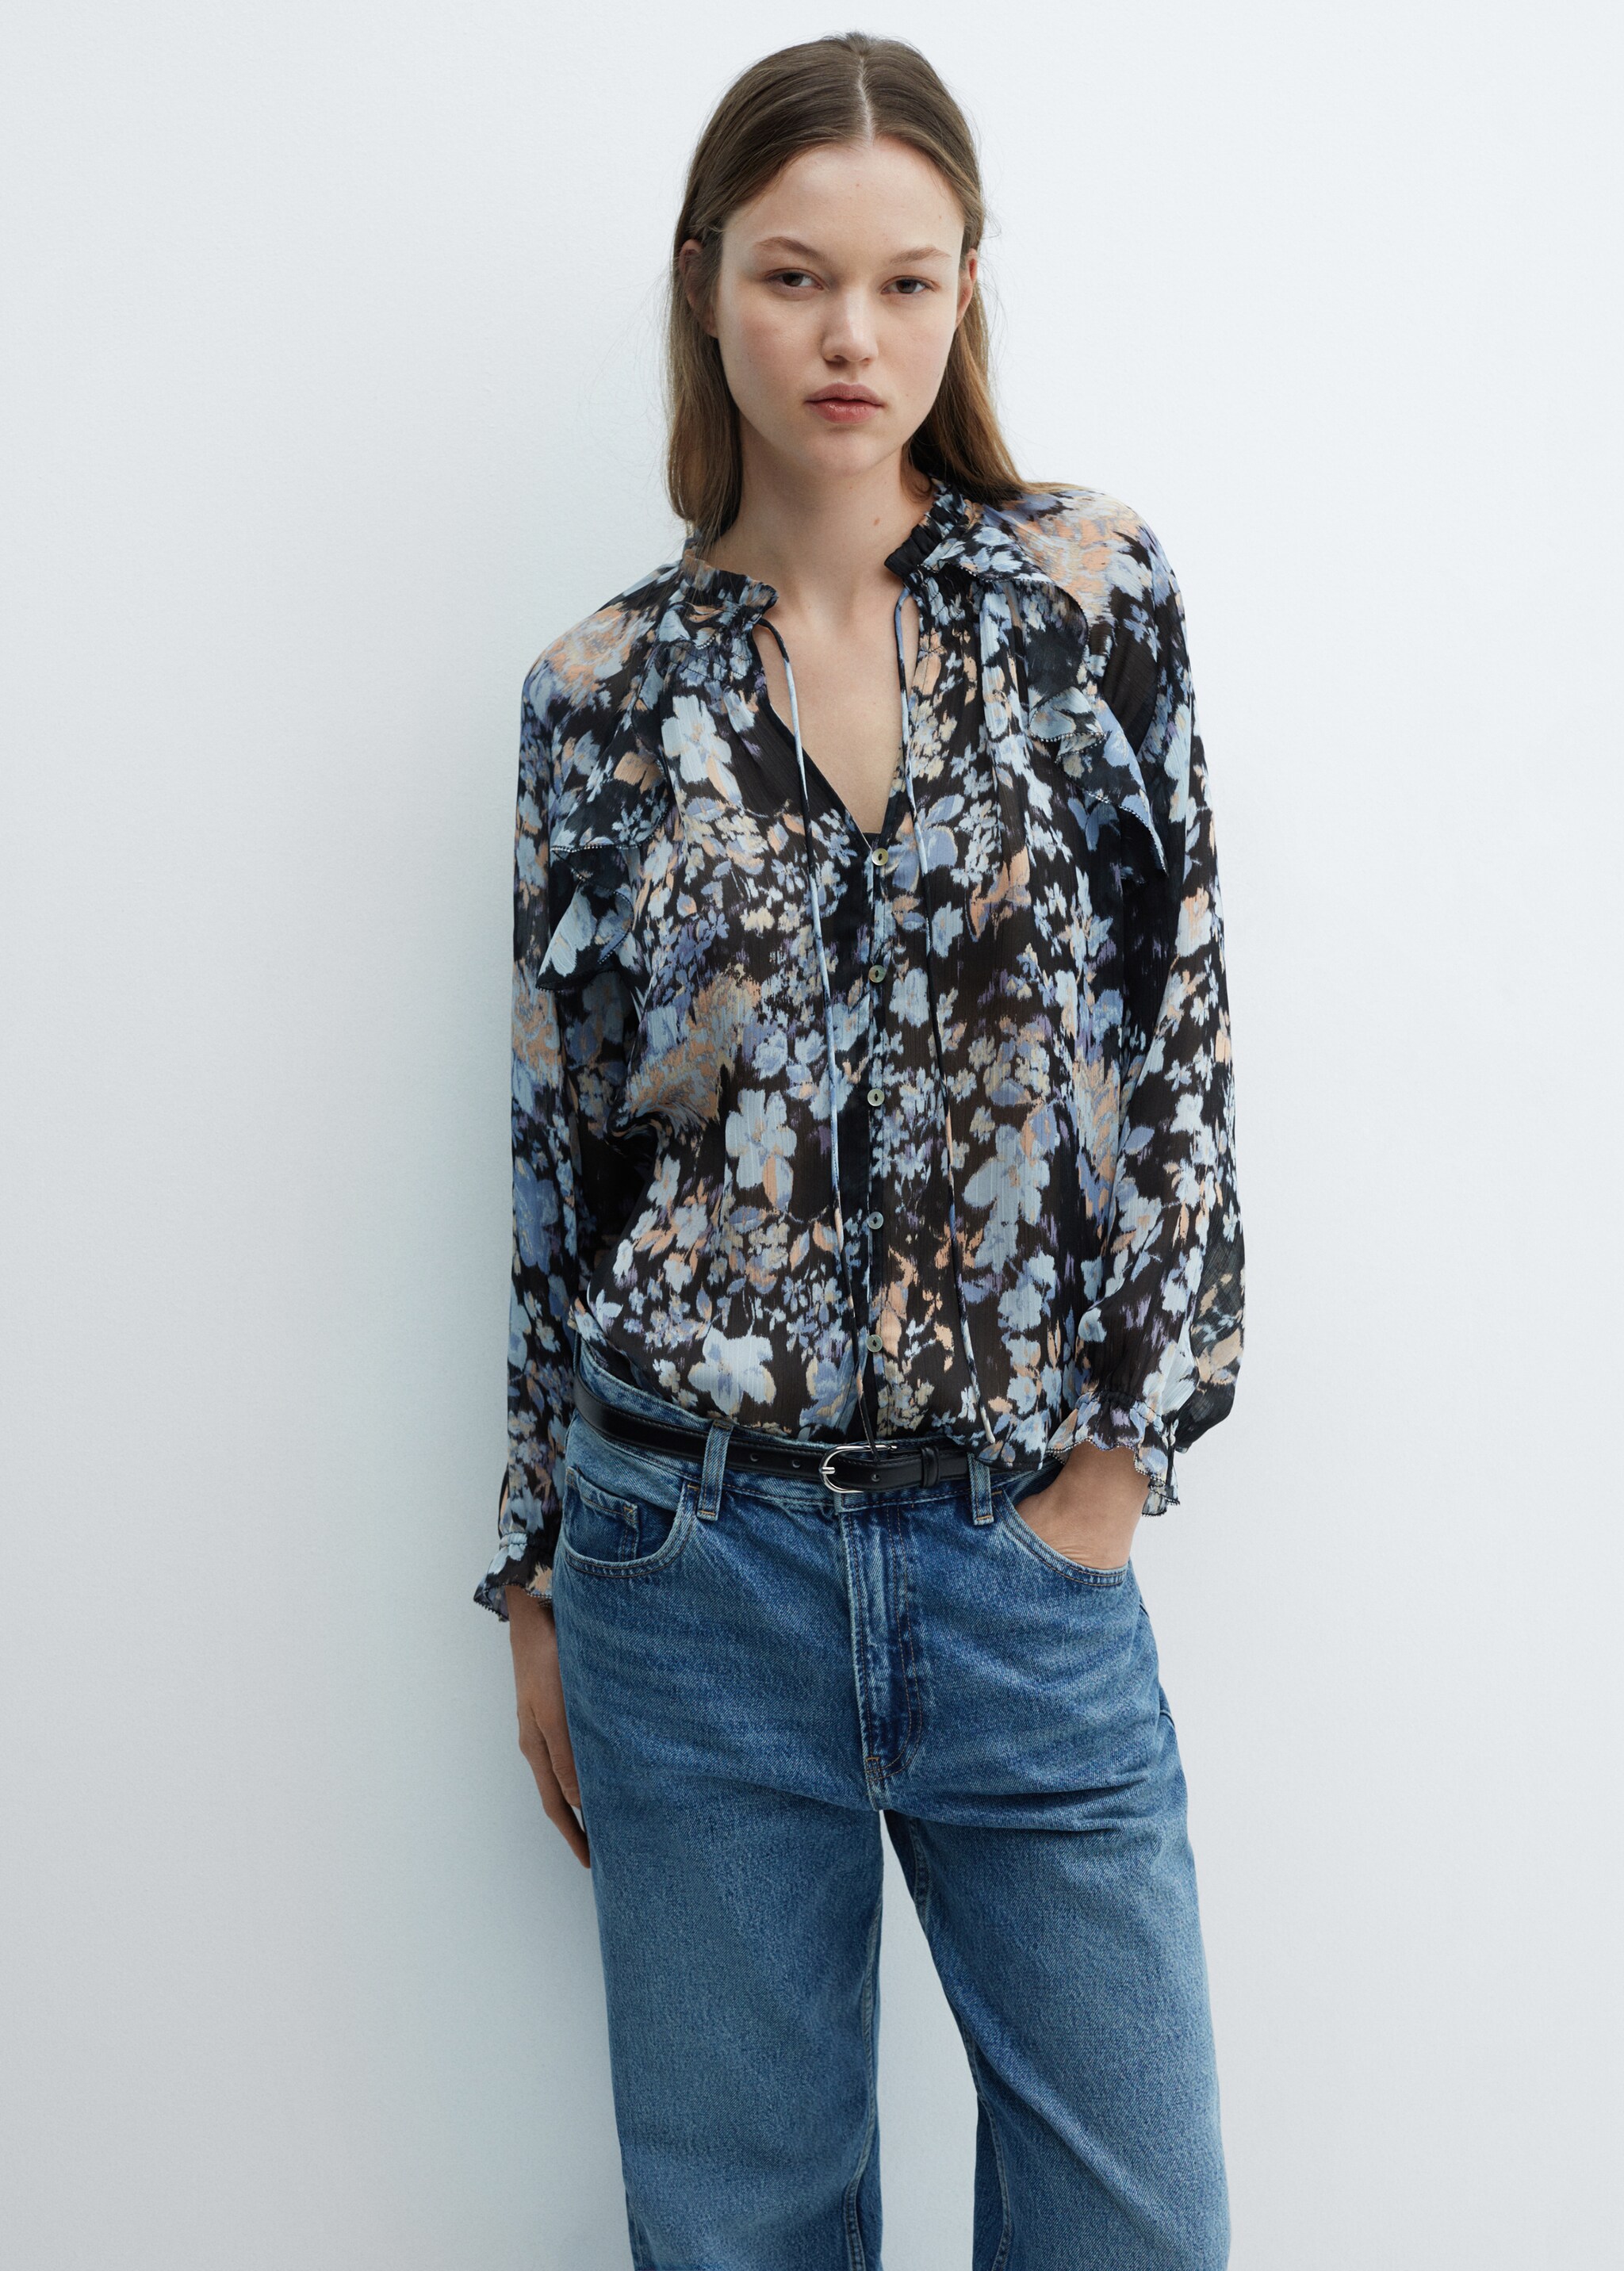 Floral-print flowy blouse - Medium plane